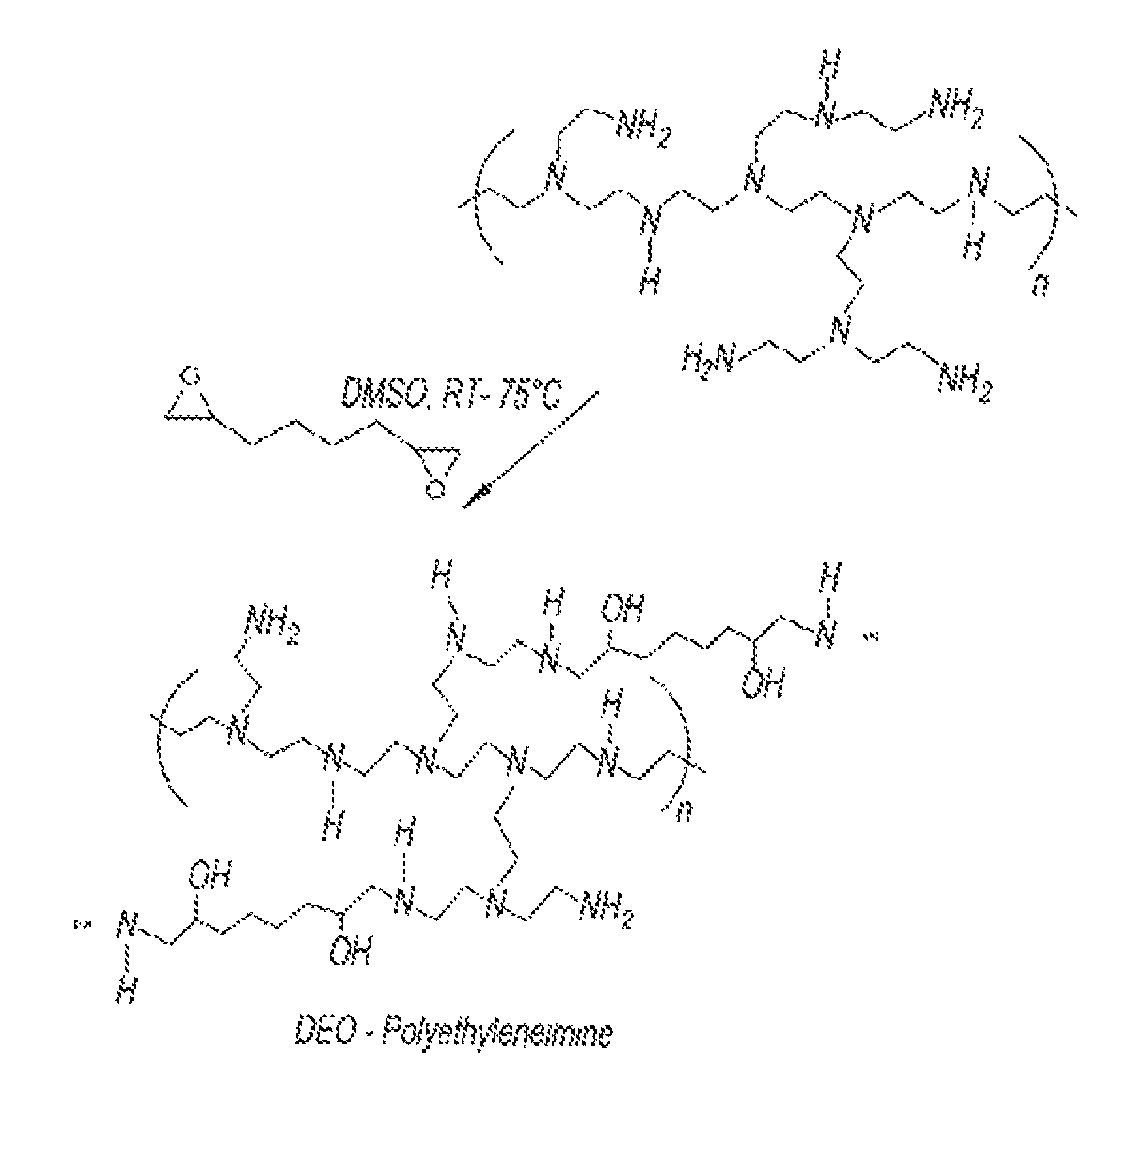 Epoxy-amine acid gas adsorption-desorption polymers and oligomers, processes for preparing same, and uses thereof